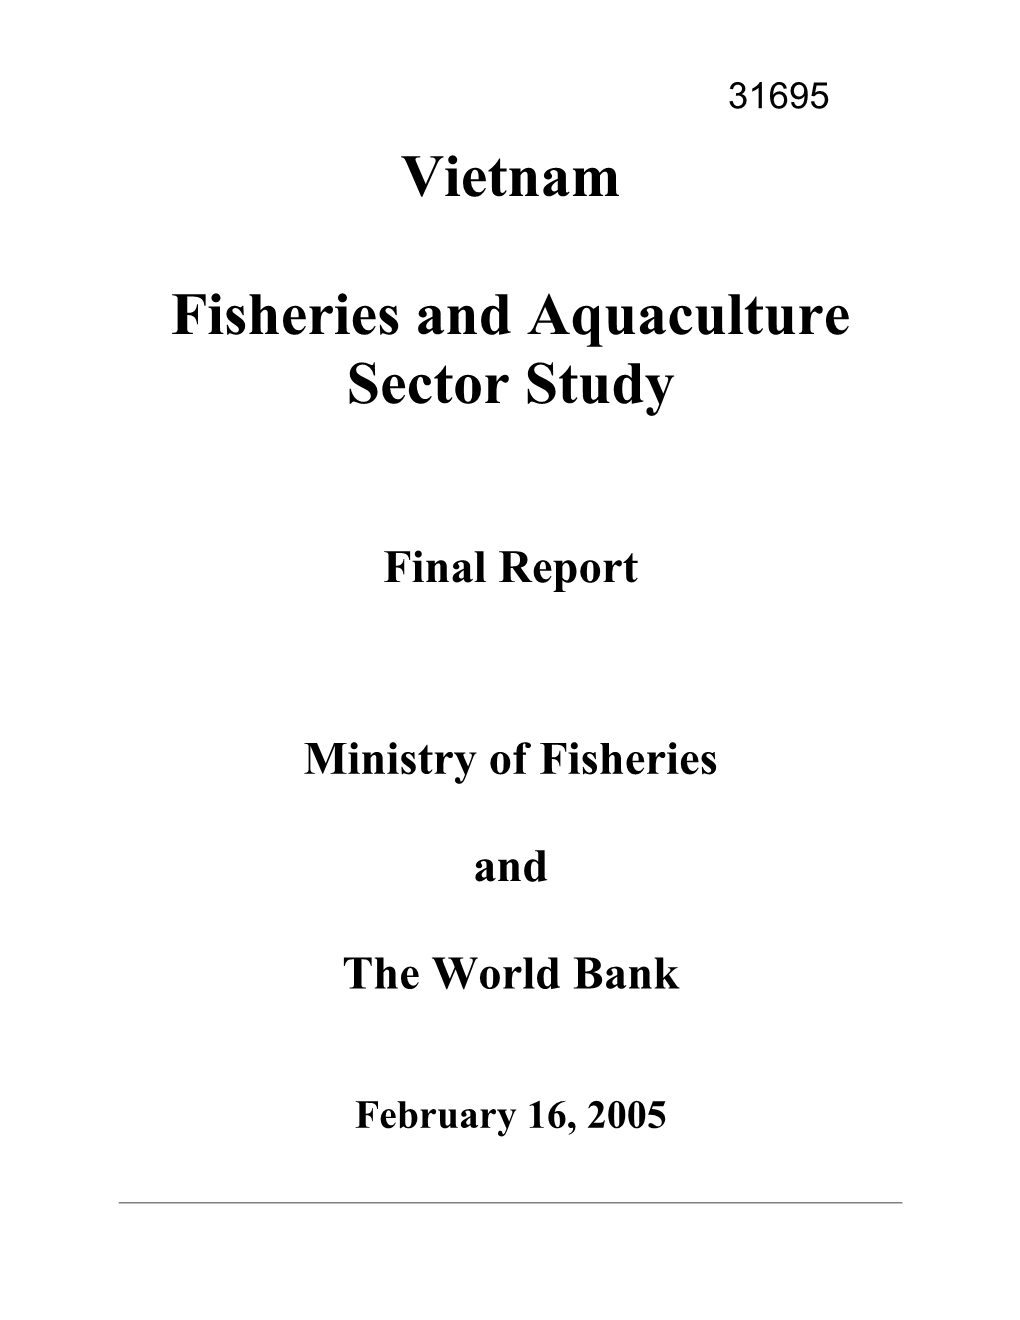 Vietnam Fisheries Sector Study